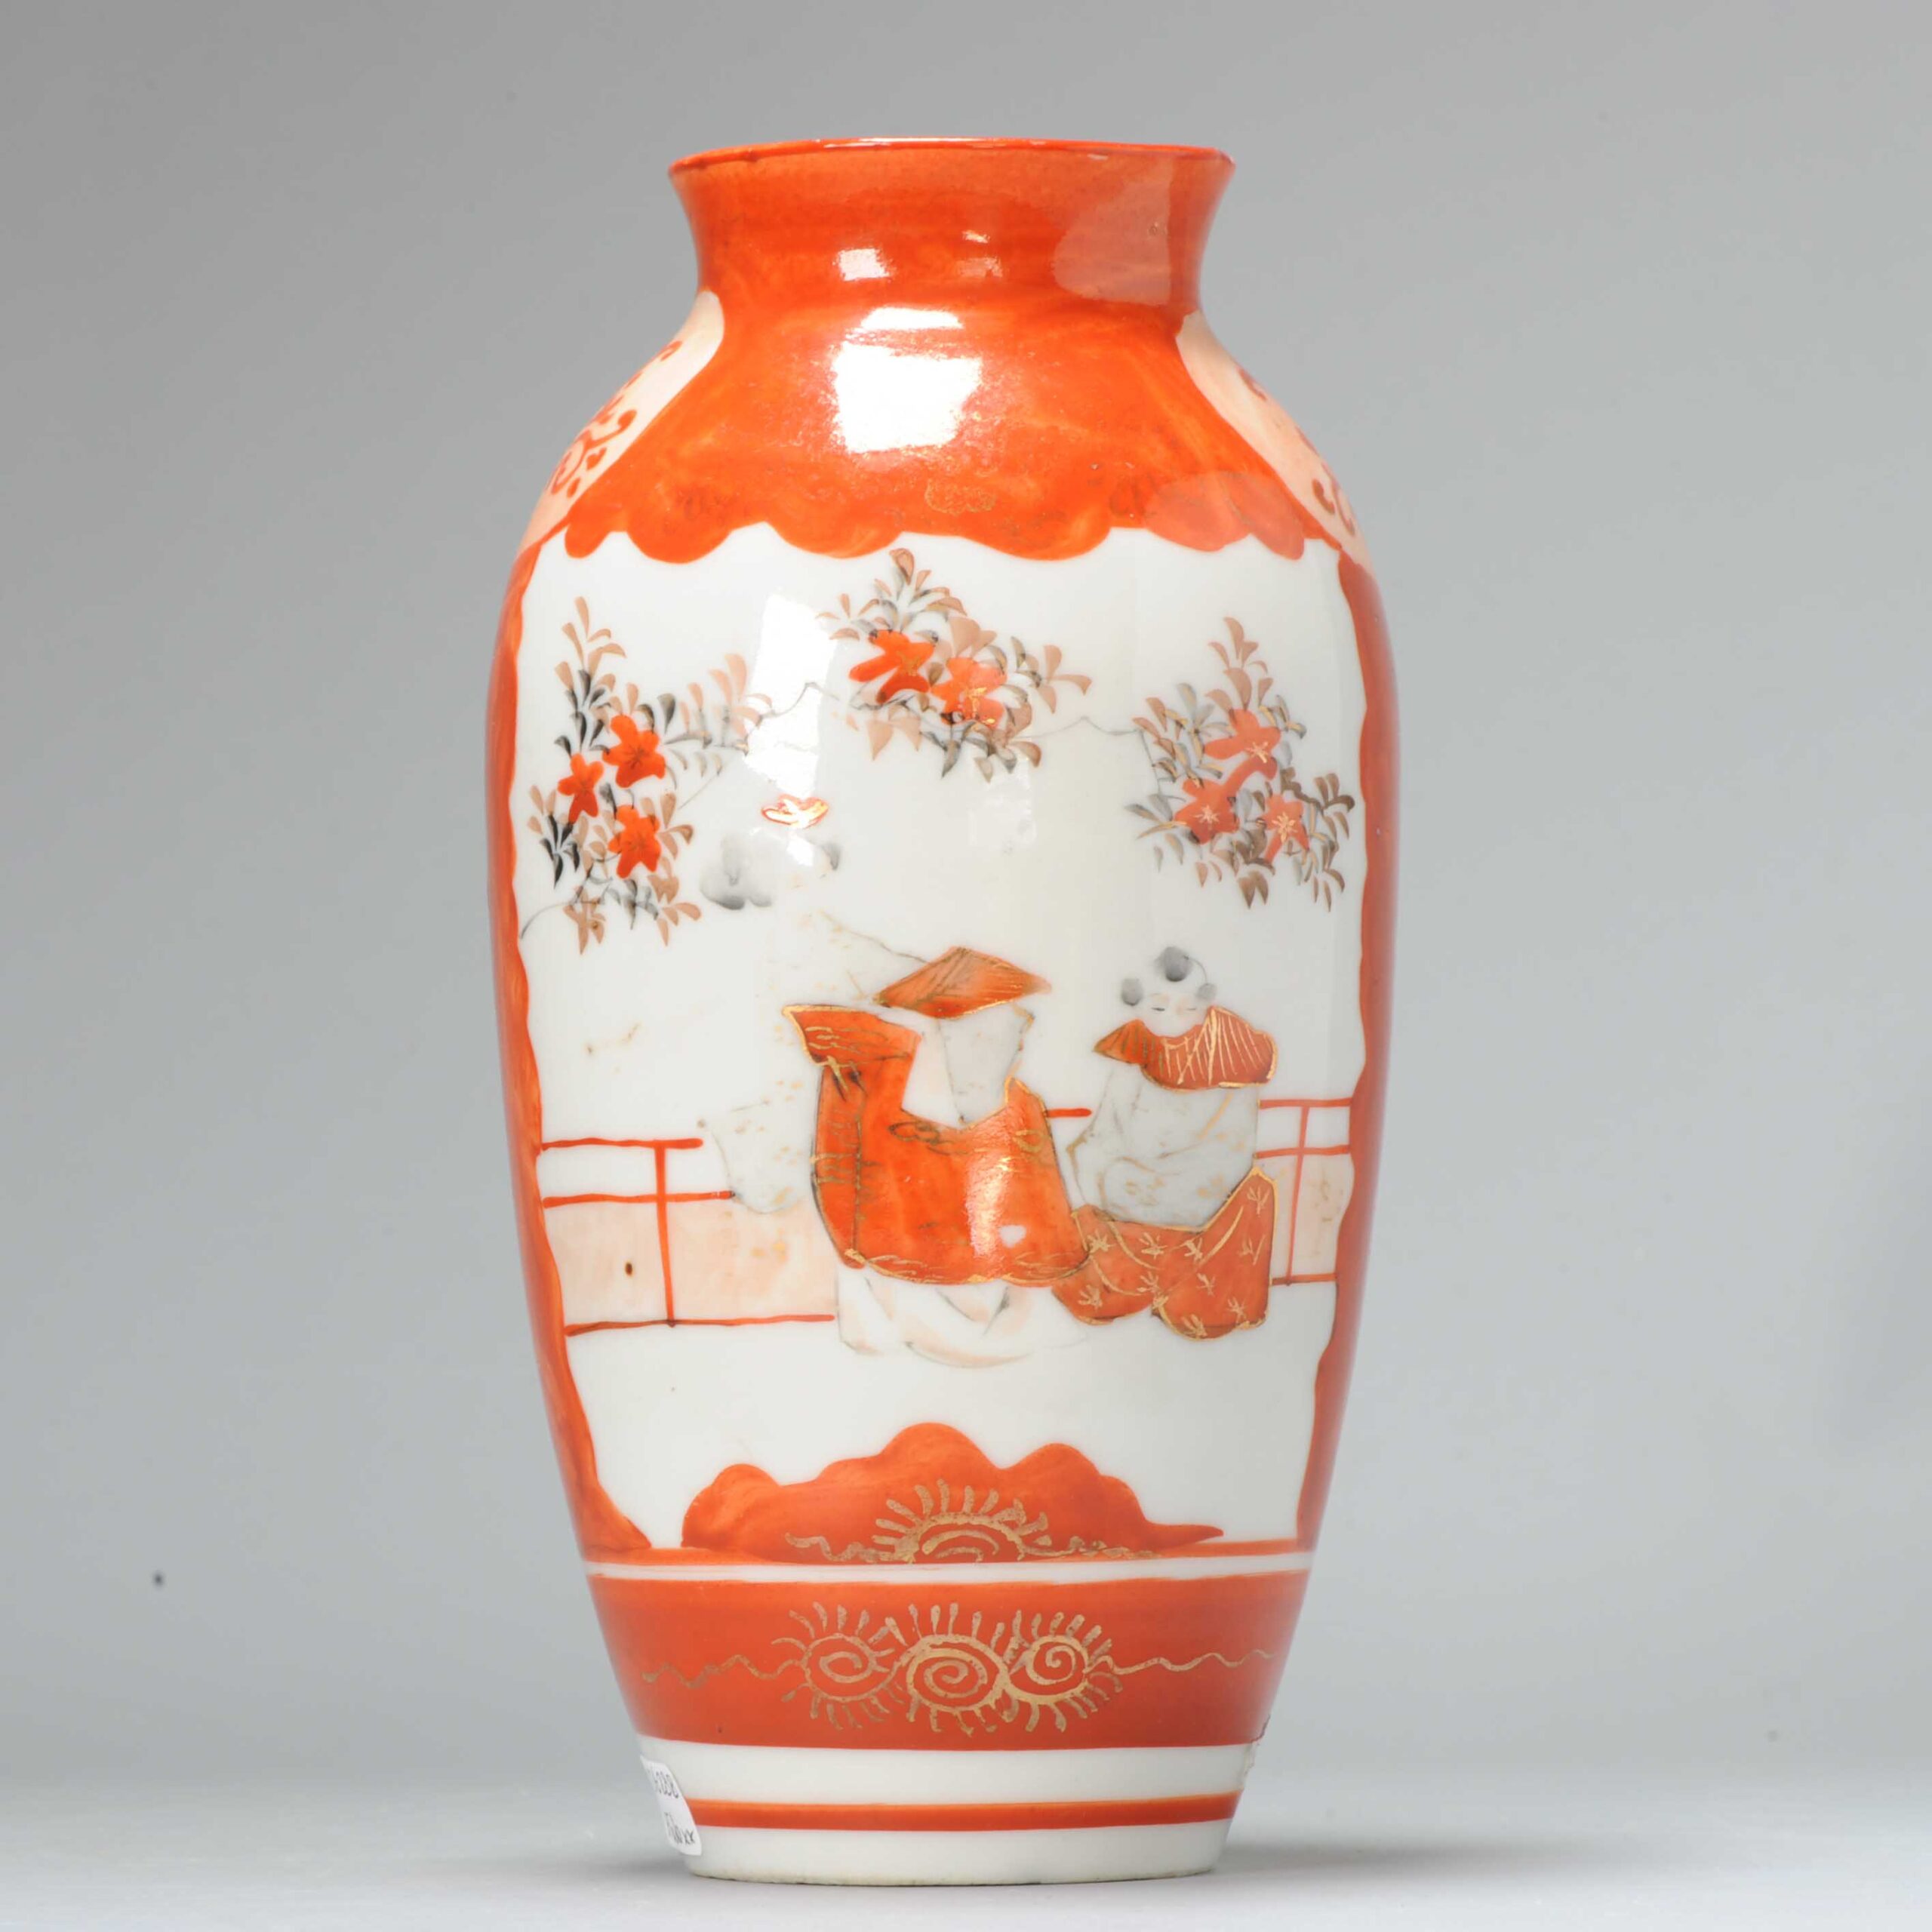 Antique Meiji period Japanese Kutani Vase 19th century Red and White